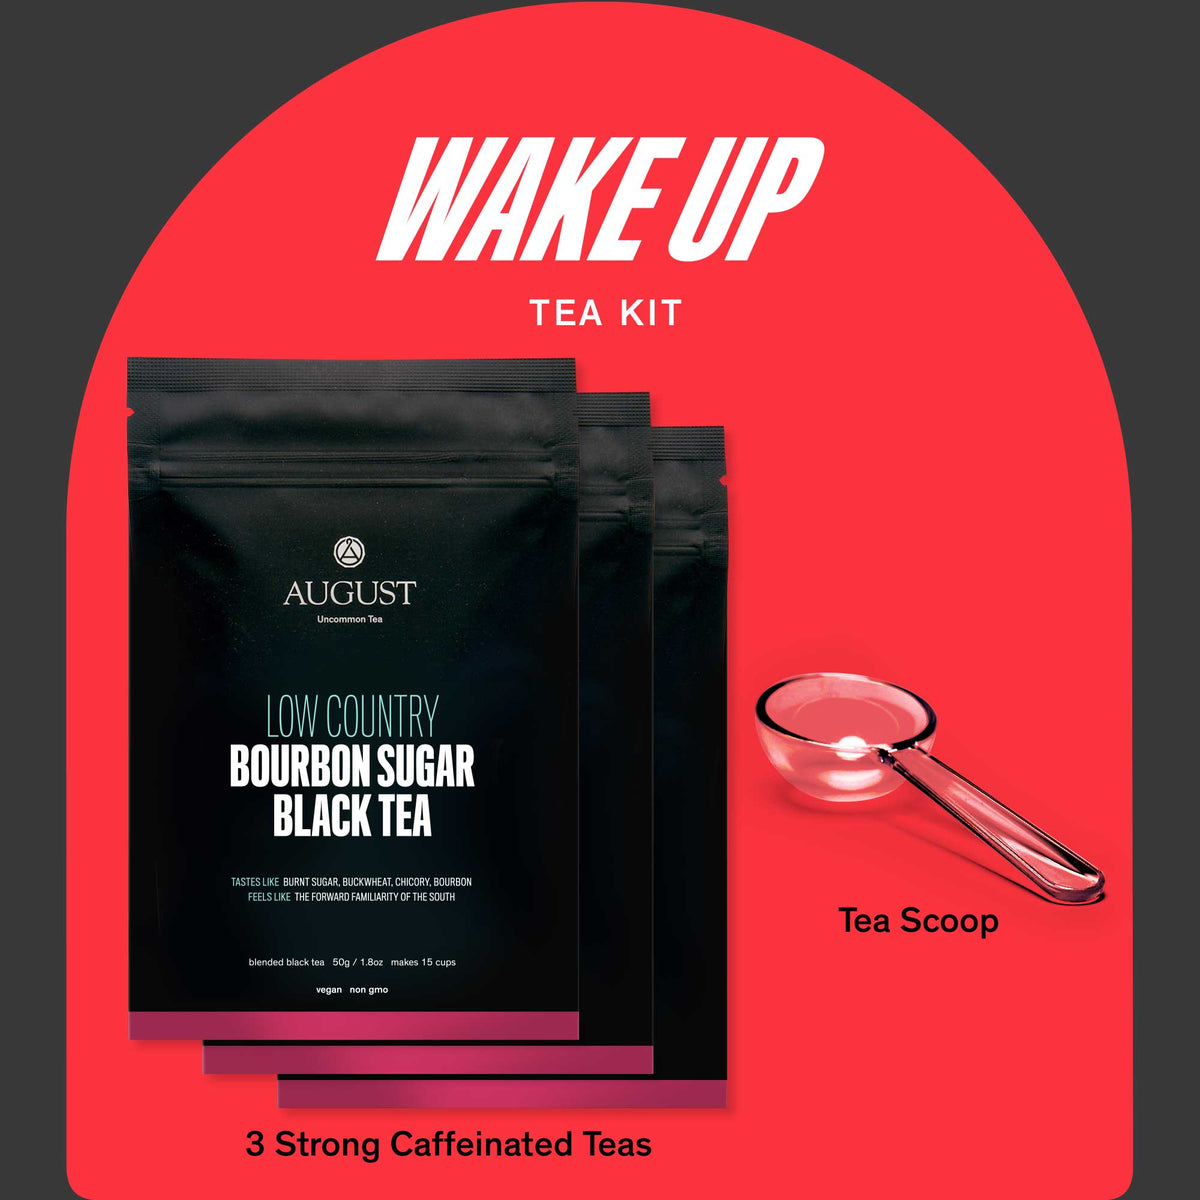 Wake Up Tea Kit: 3 Strong Caffeinated Teas to Jumpstart Your Day